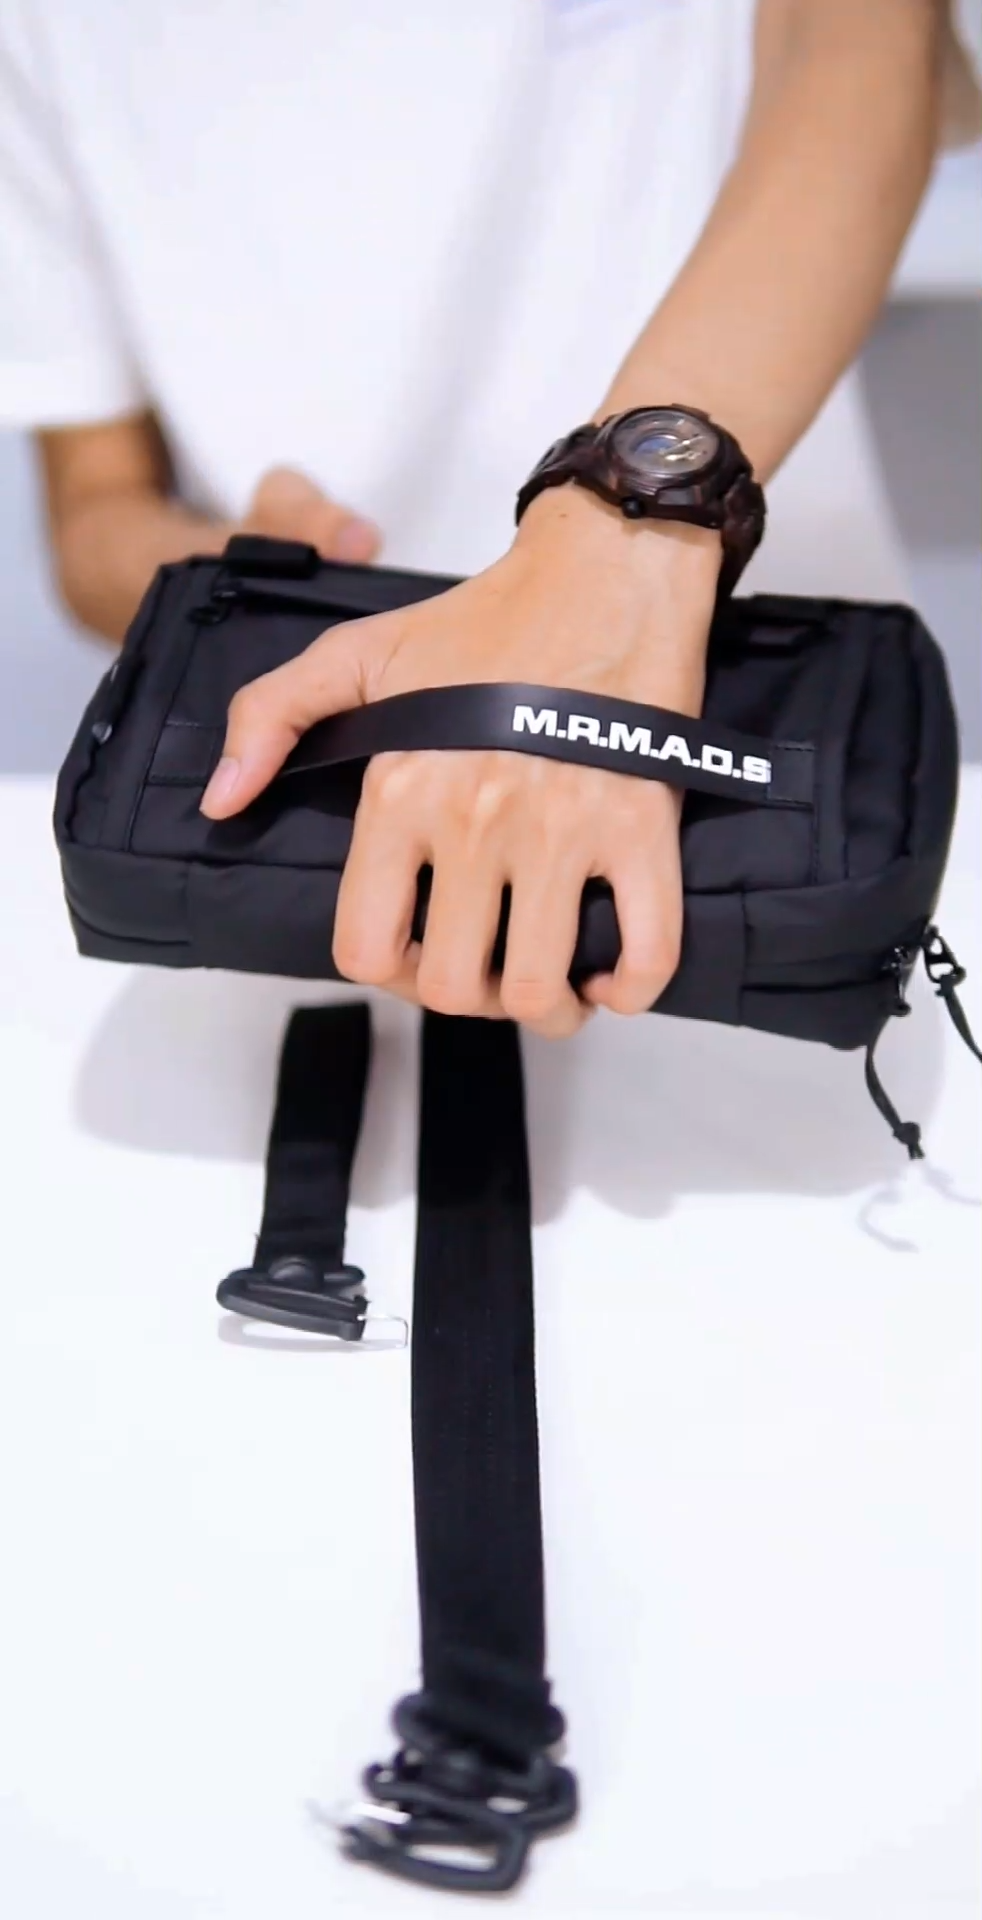 Mr Mads - Forlan Clutch bag - Waist bag Sling bag Hand bag Pouch bag Tas  Selempang Tas Pinggang - Multifungsi | Lazada Indonesia